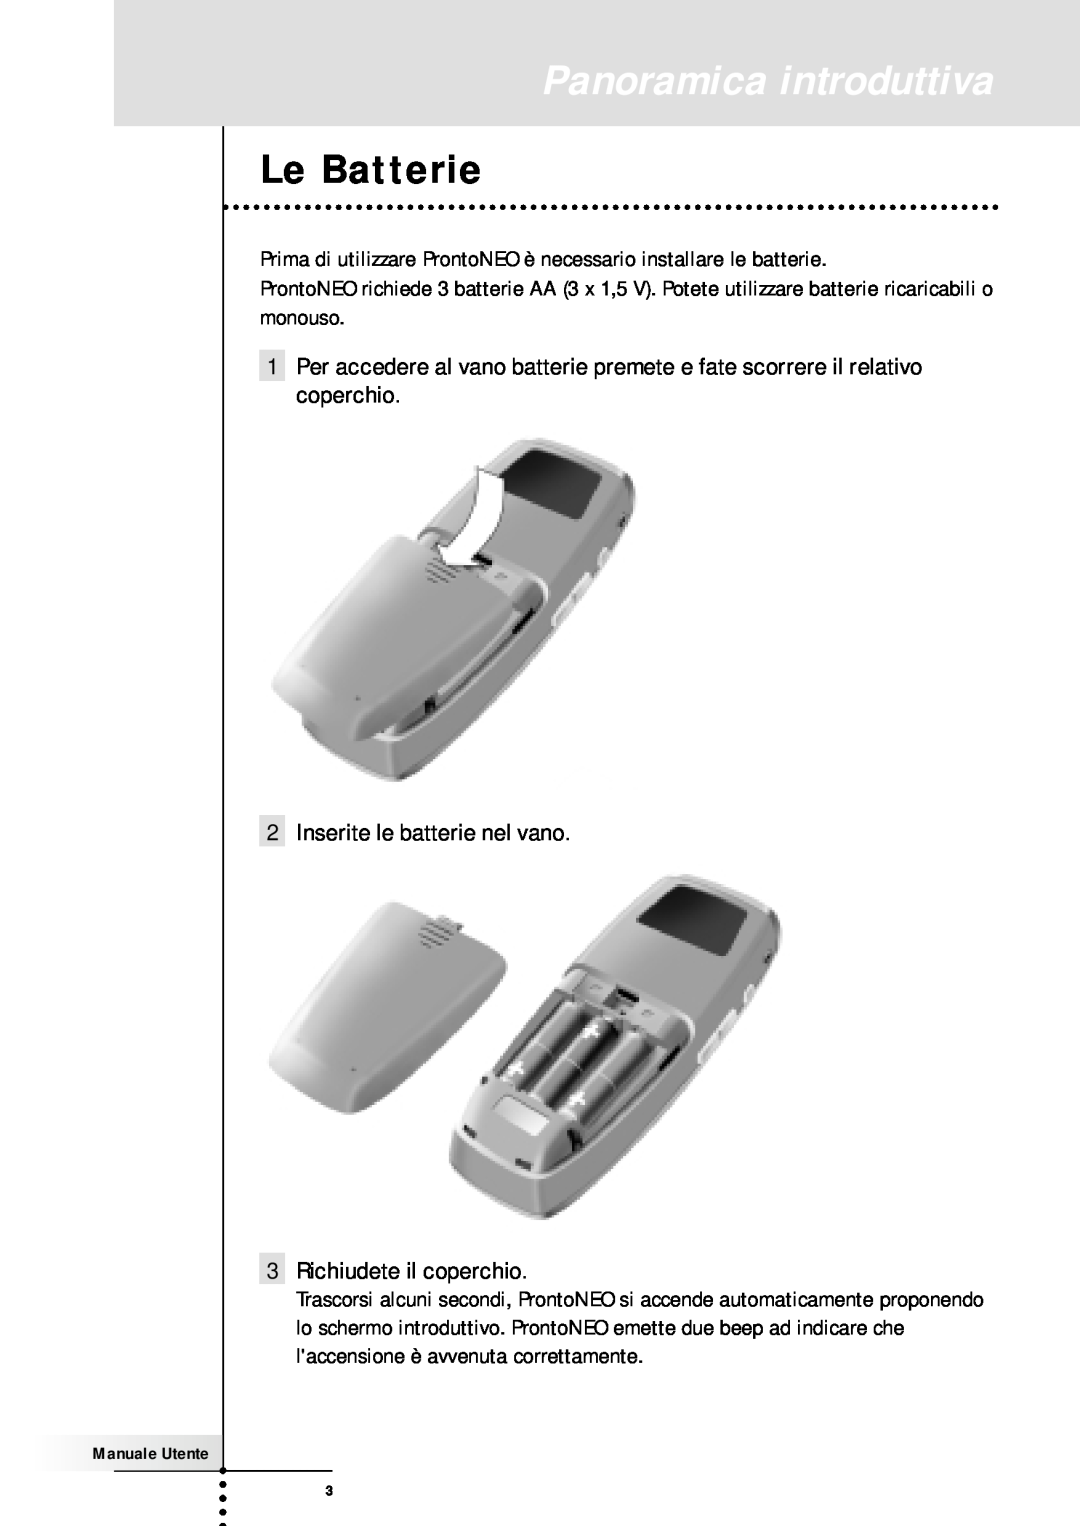 Memorex SBC RU 930 manual Le Batterie, Panoramica introduttiva 